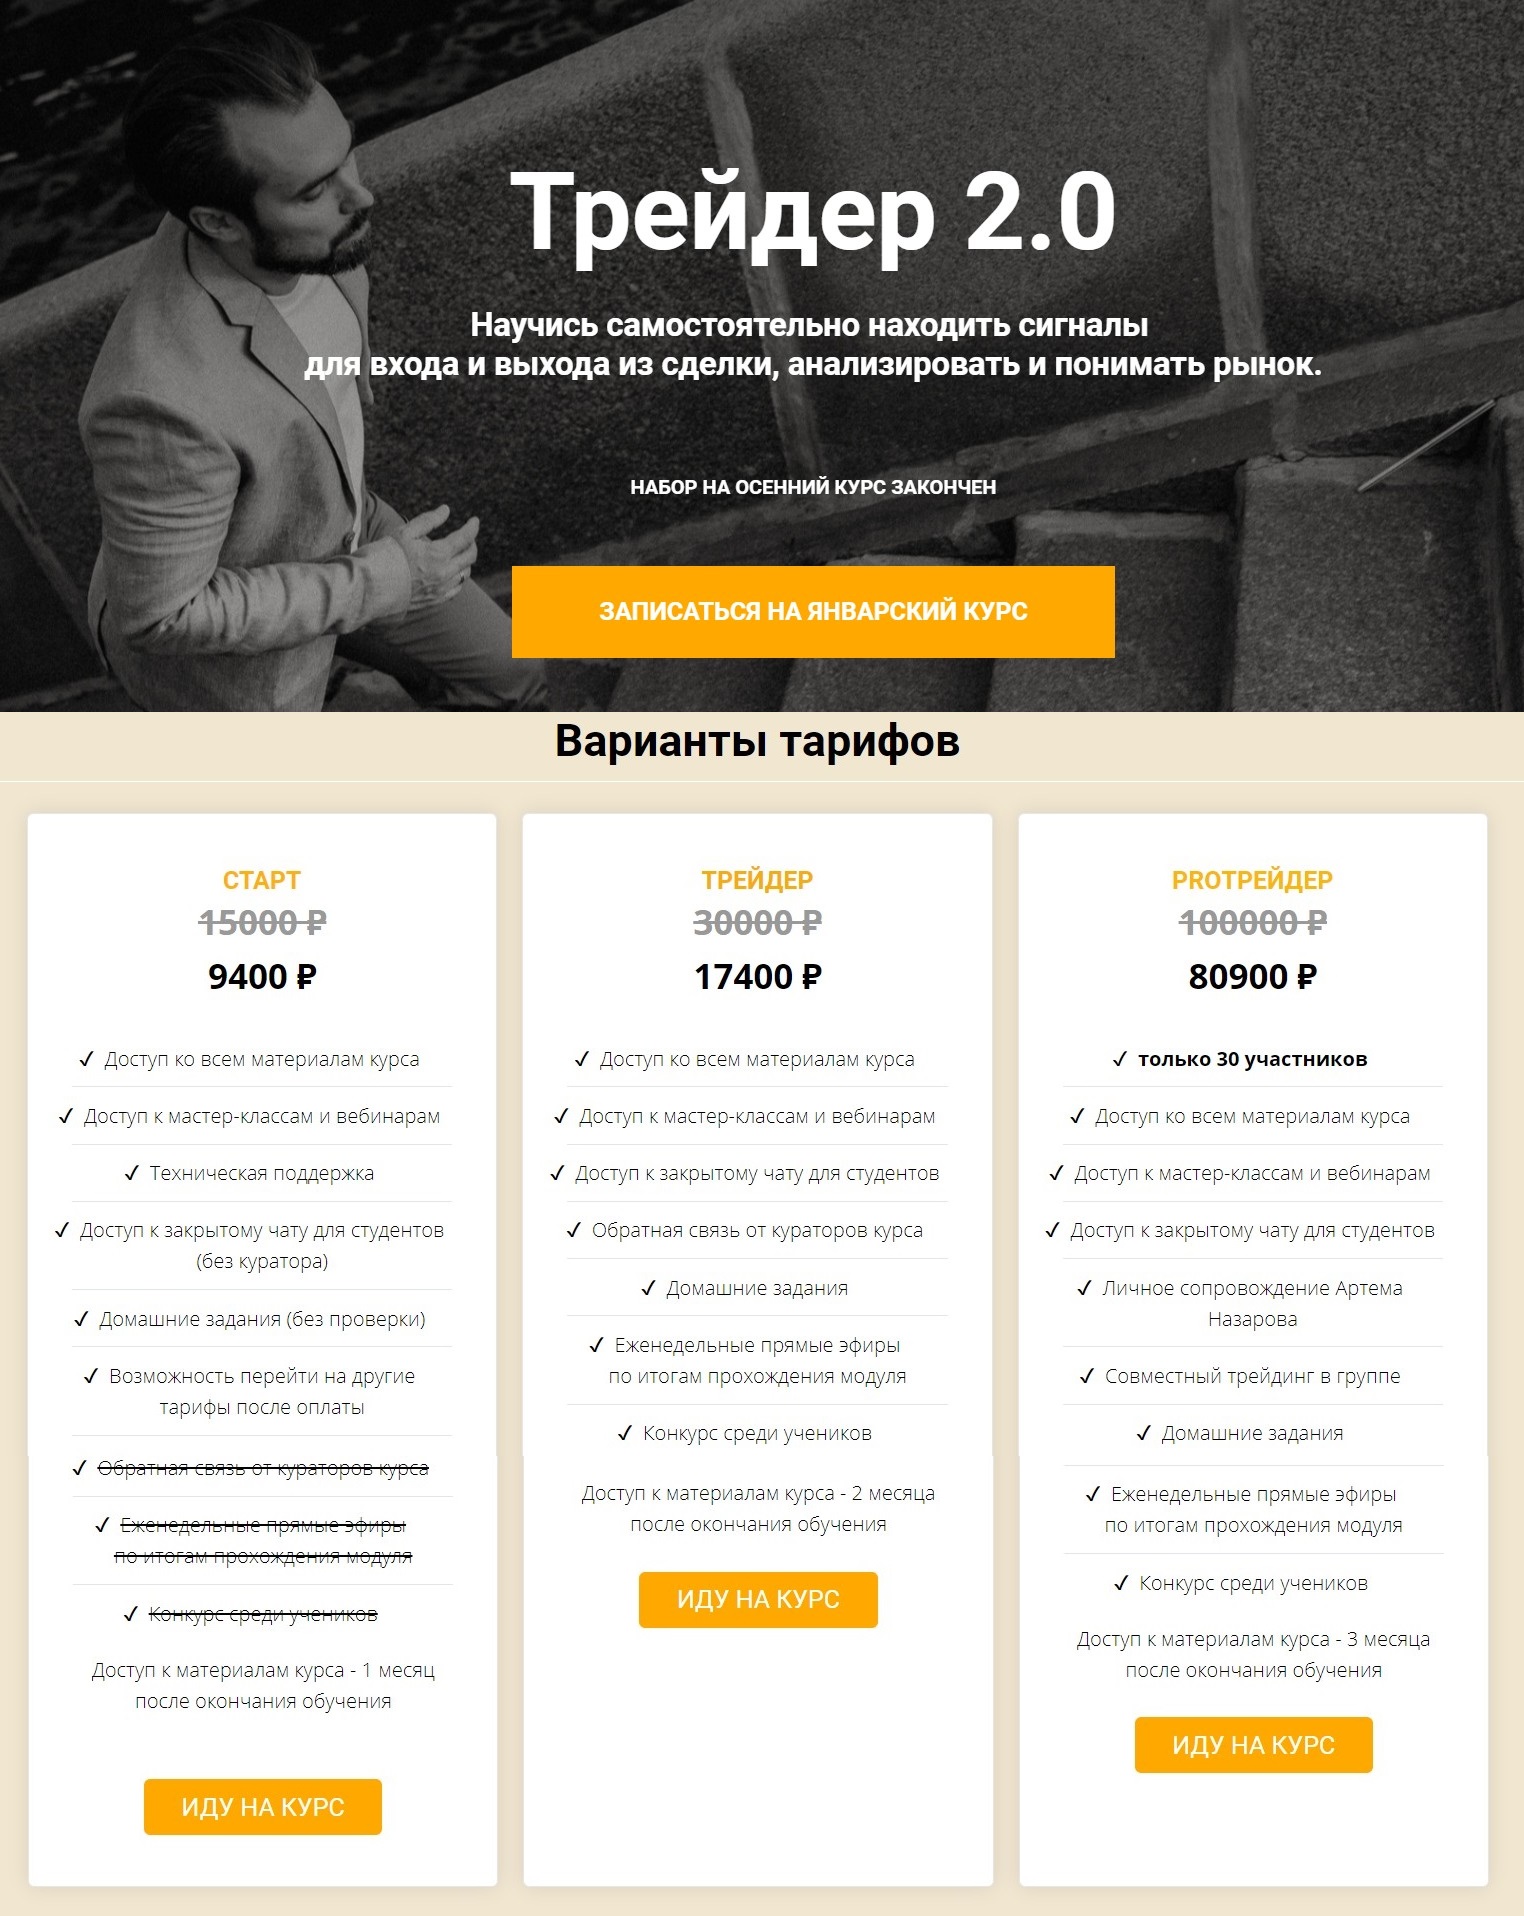 Трейдер 2.0 от Артема Назарова